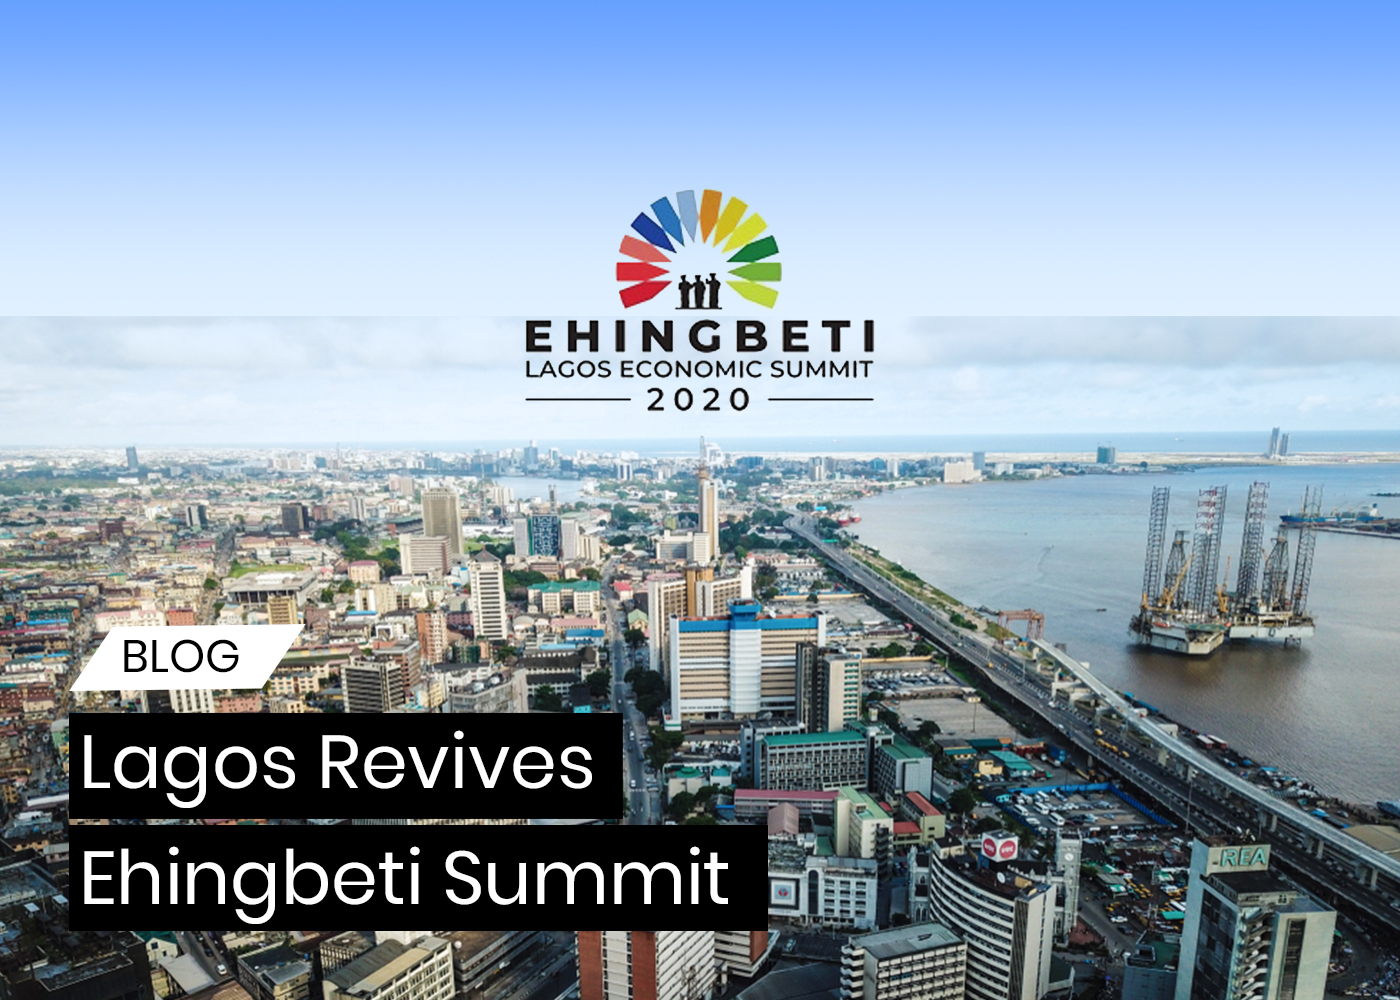 Lagos Revives Ehingbeti Summit